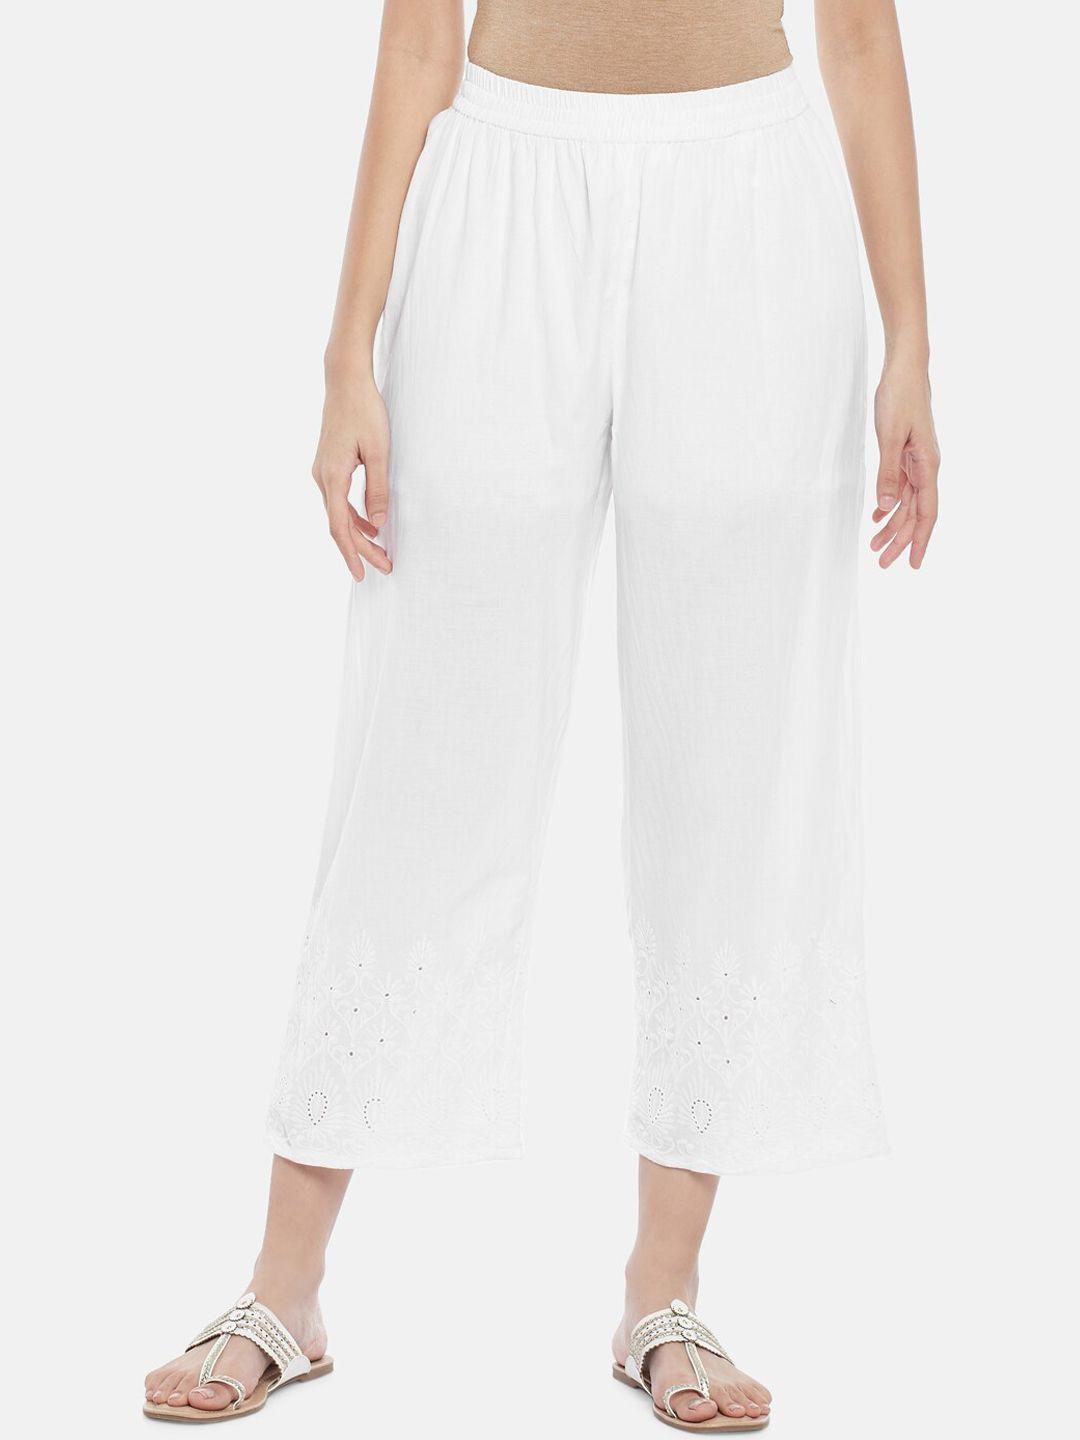 rangmanch by pantaloons women white pure cotton culottes trousers